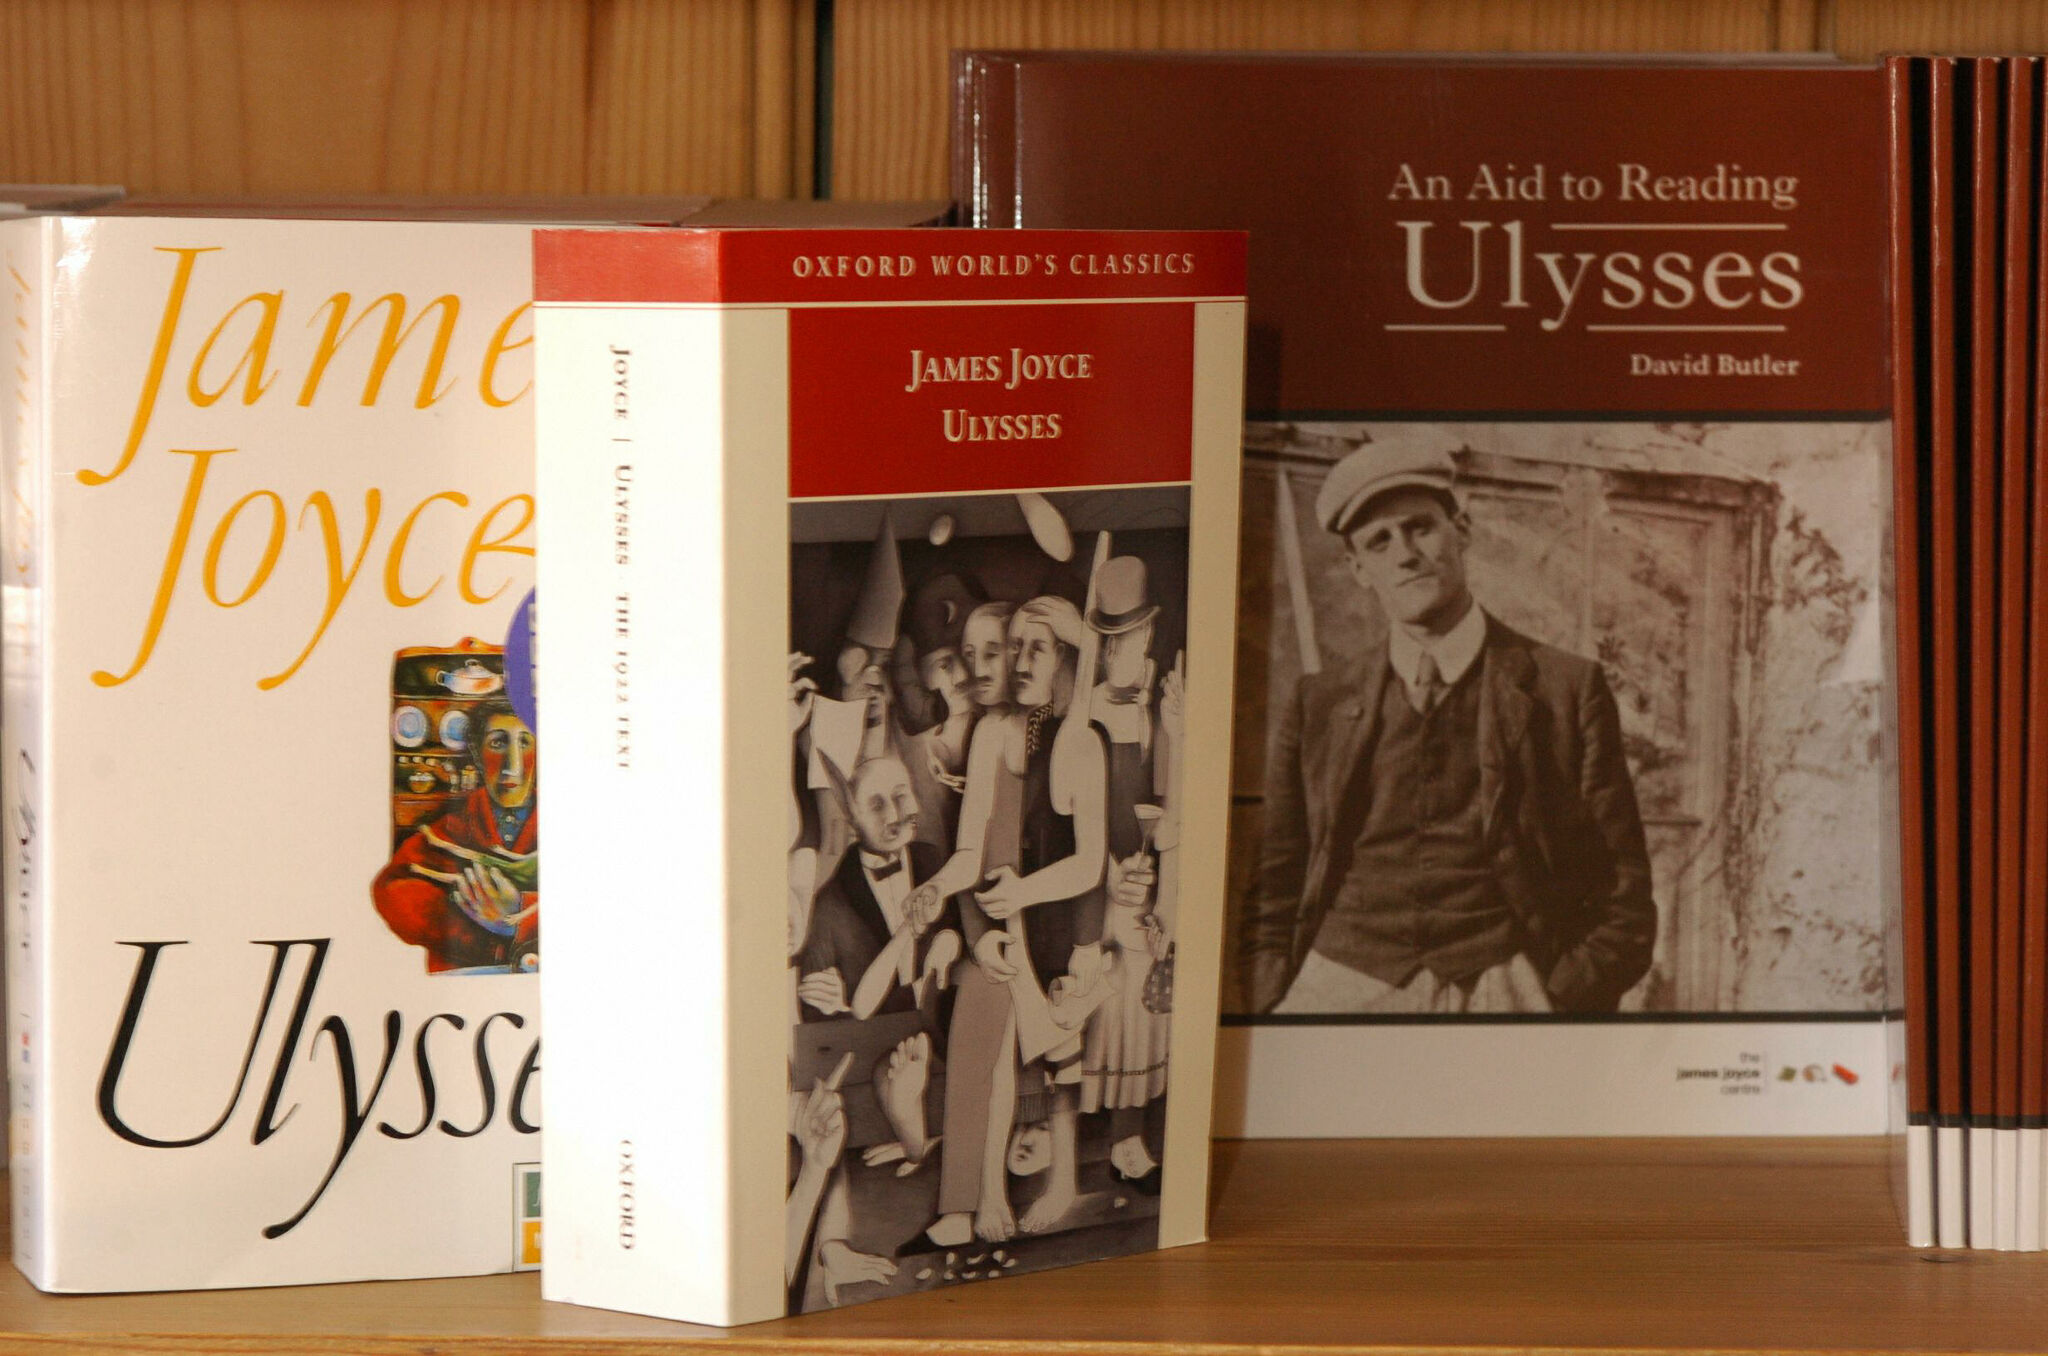 Bibliofiles: The slog, delight in James Joyce's 'Ulysses'